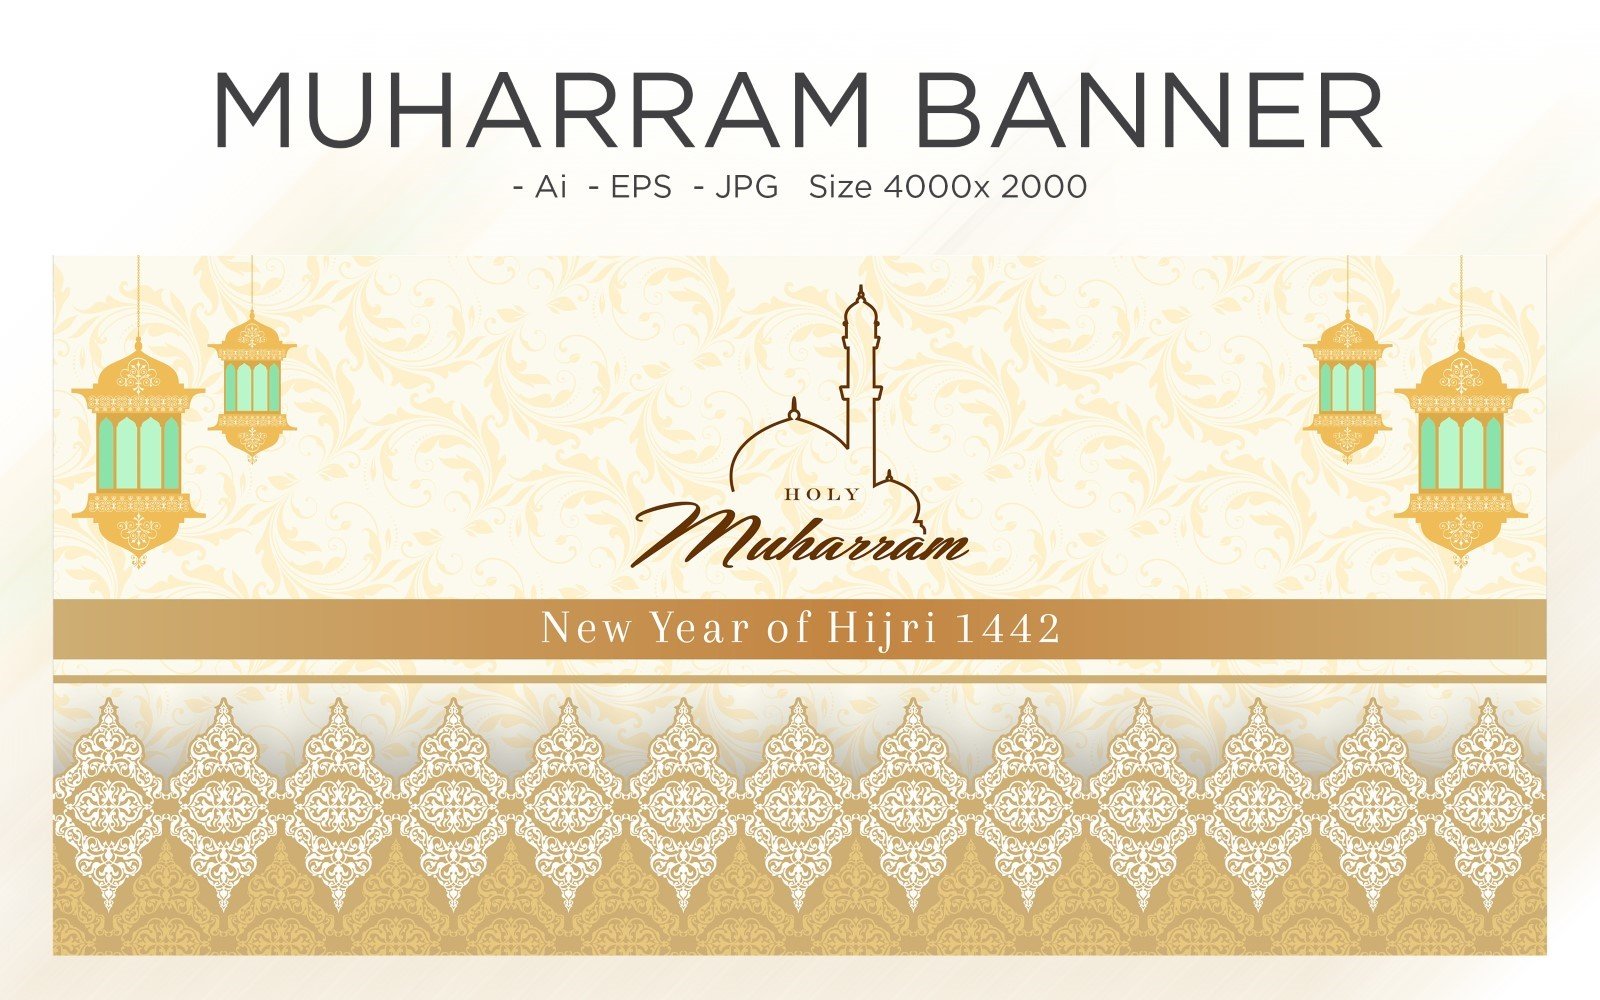 Muharram Islamic holiday banner Template - Illustration